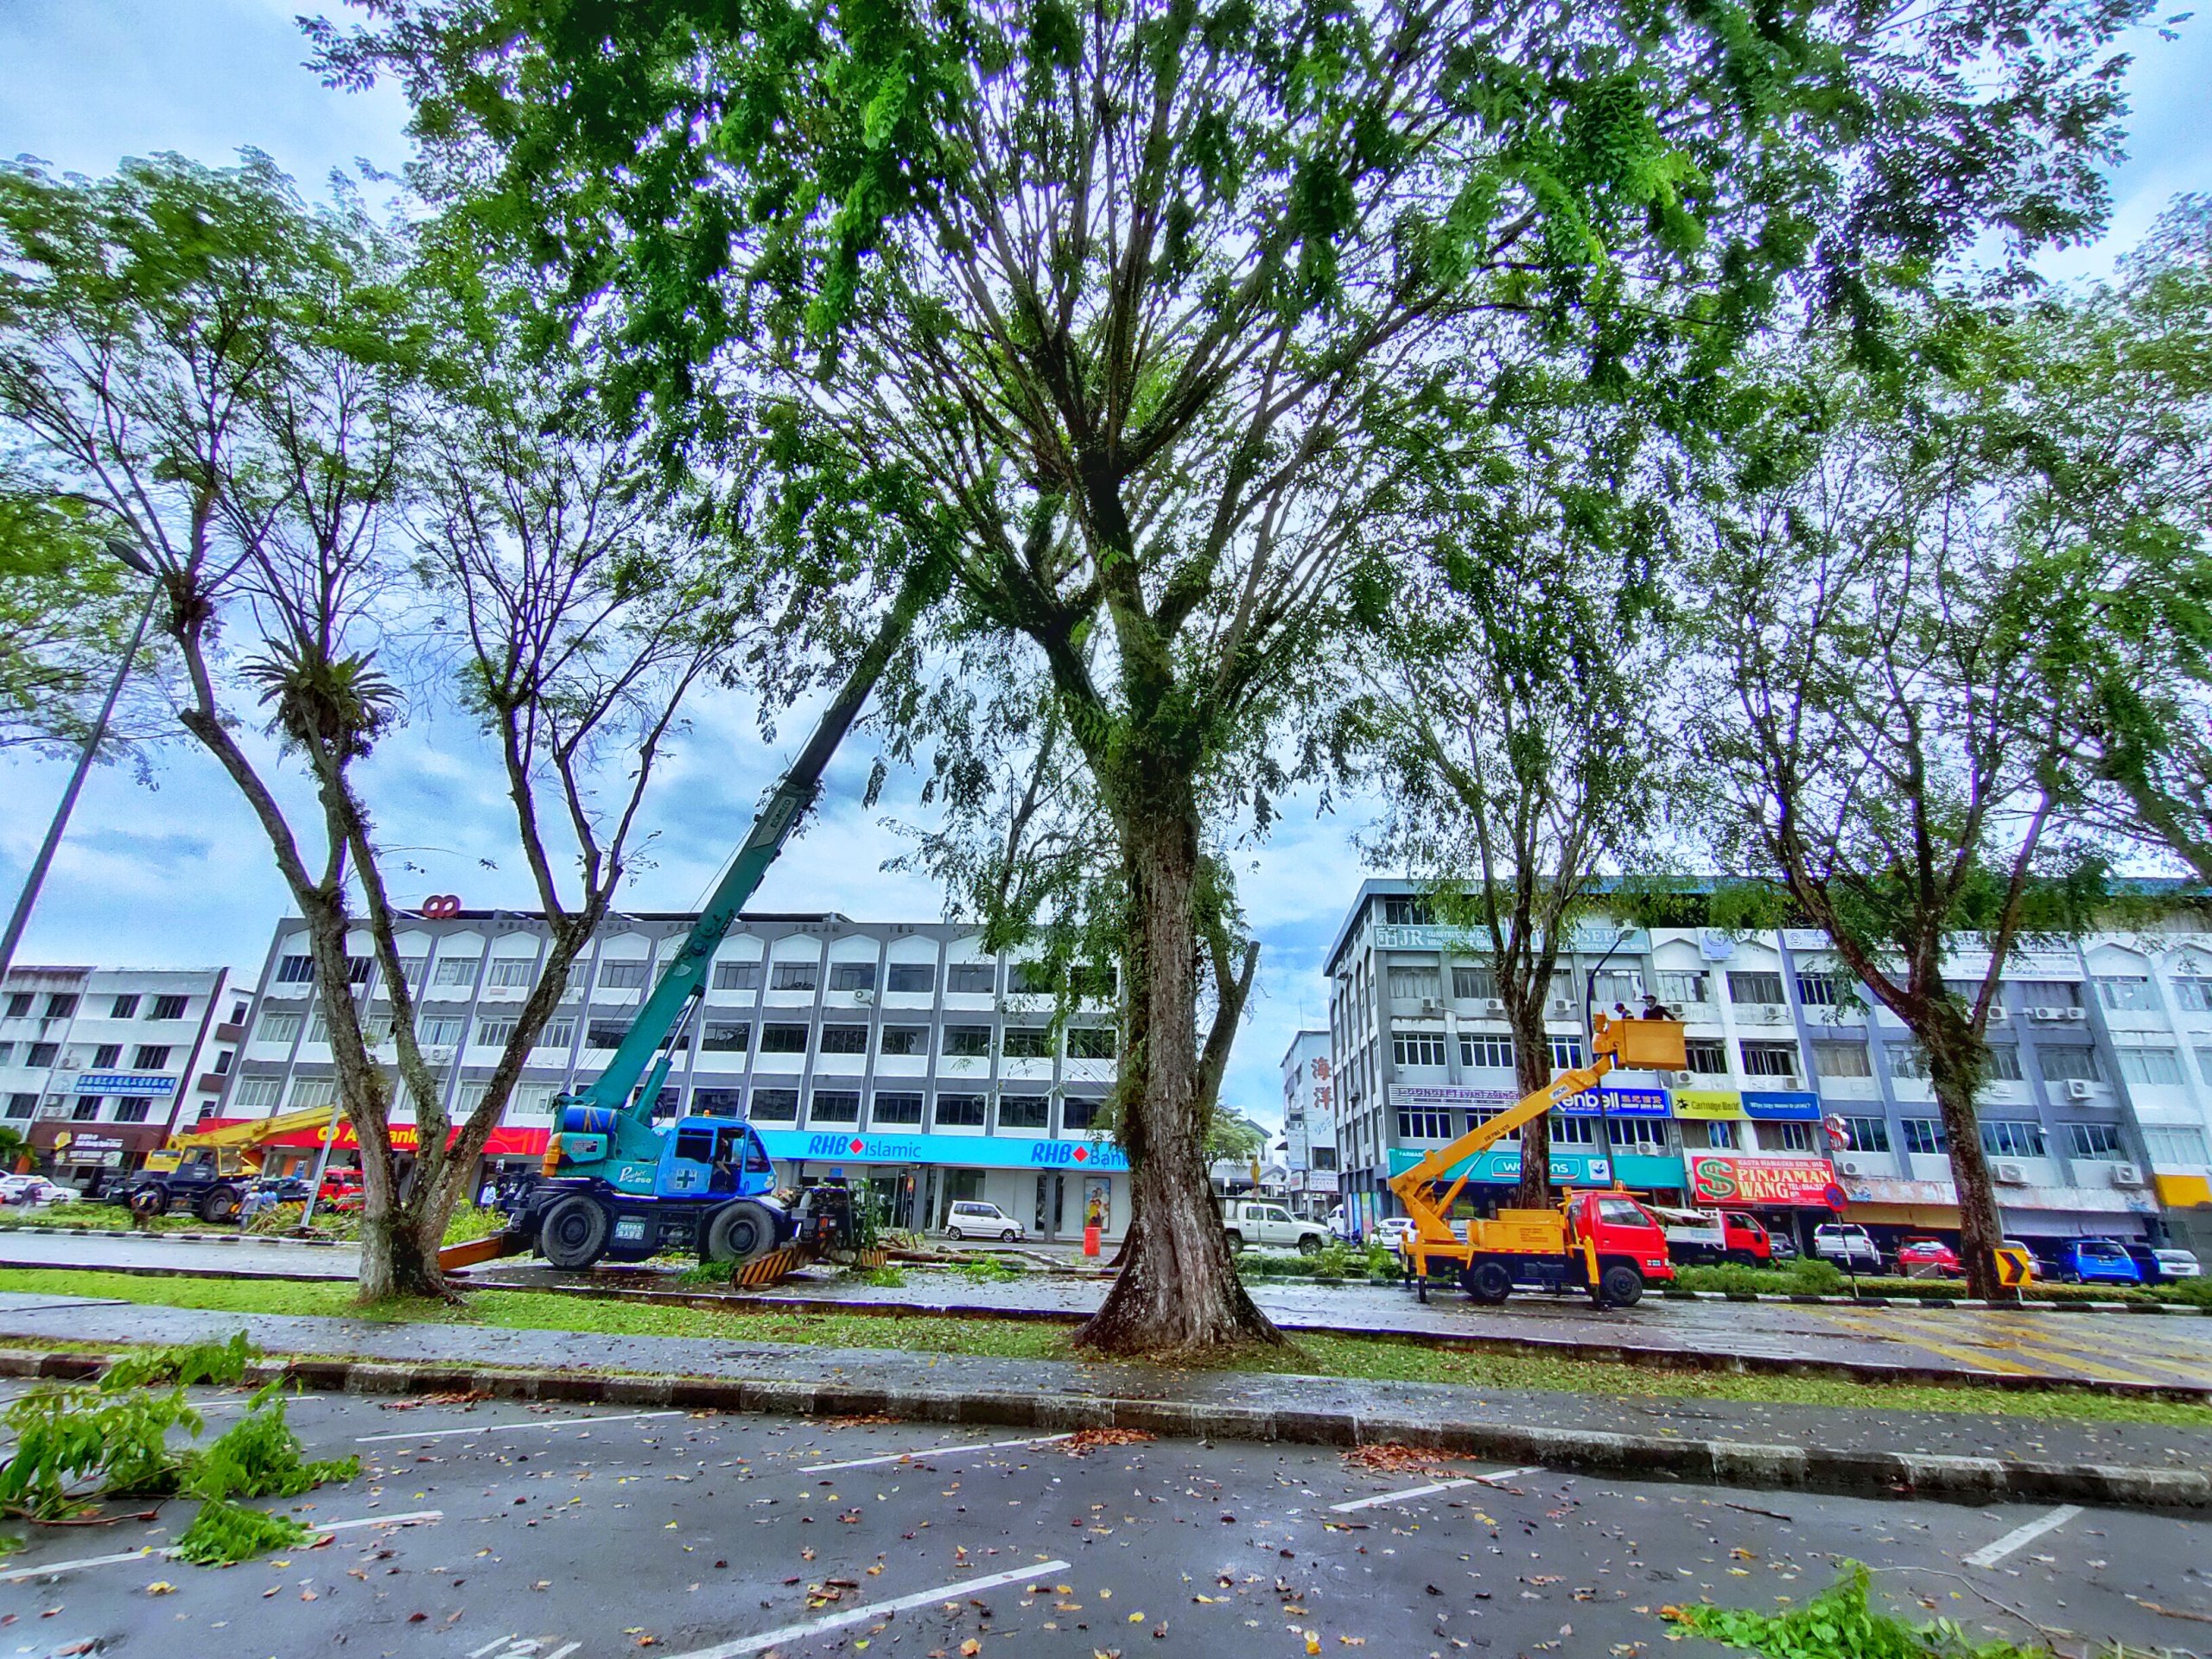 Photo taken on March 20, 2021, showing tree trimming works in progress along Jalan Tuanku Osman, Sibu. – Photo by Peter Boon